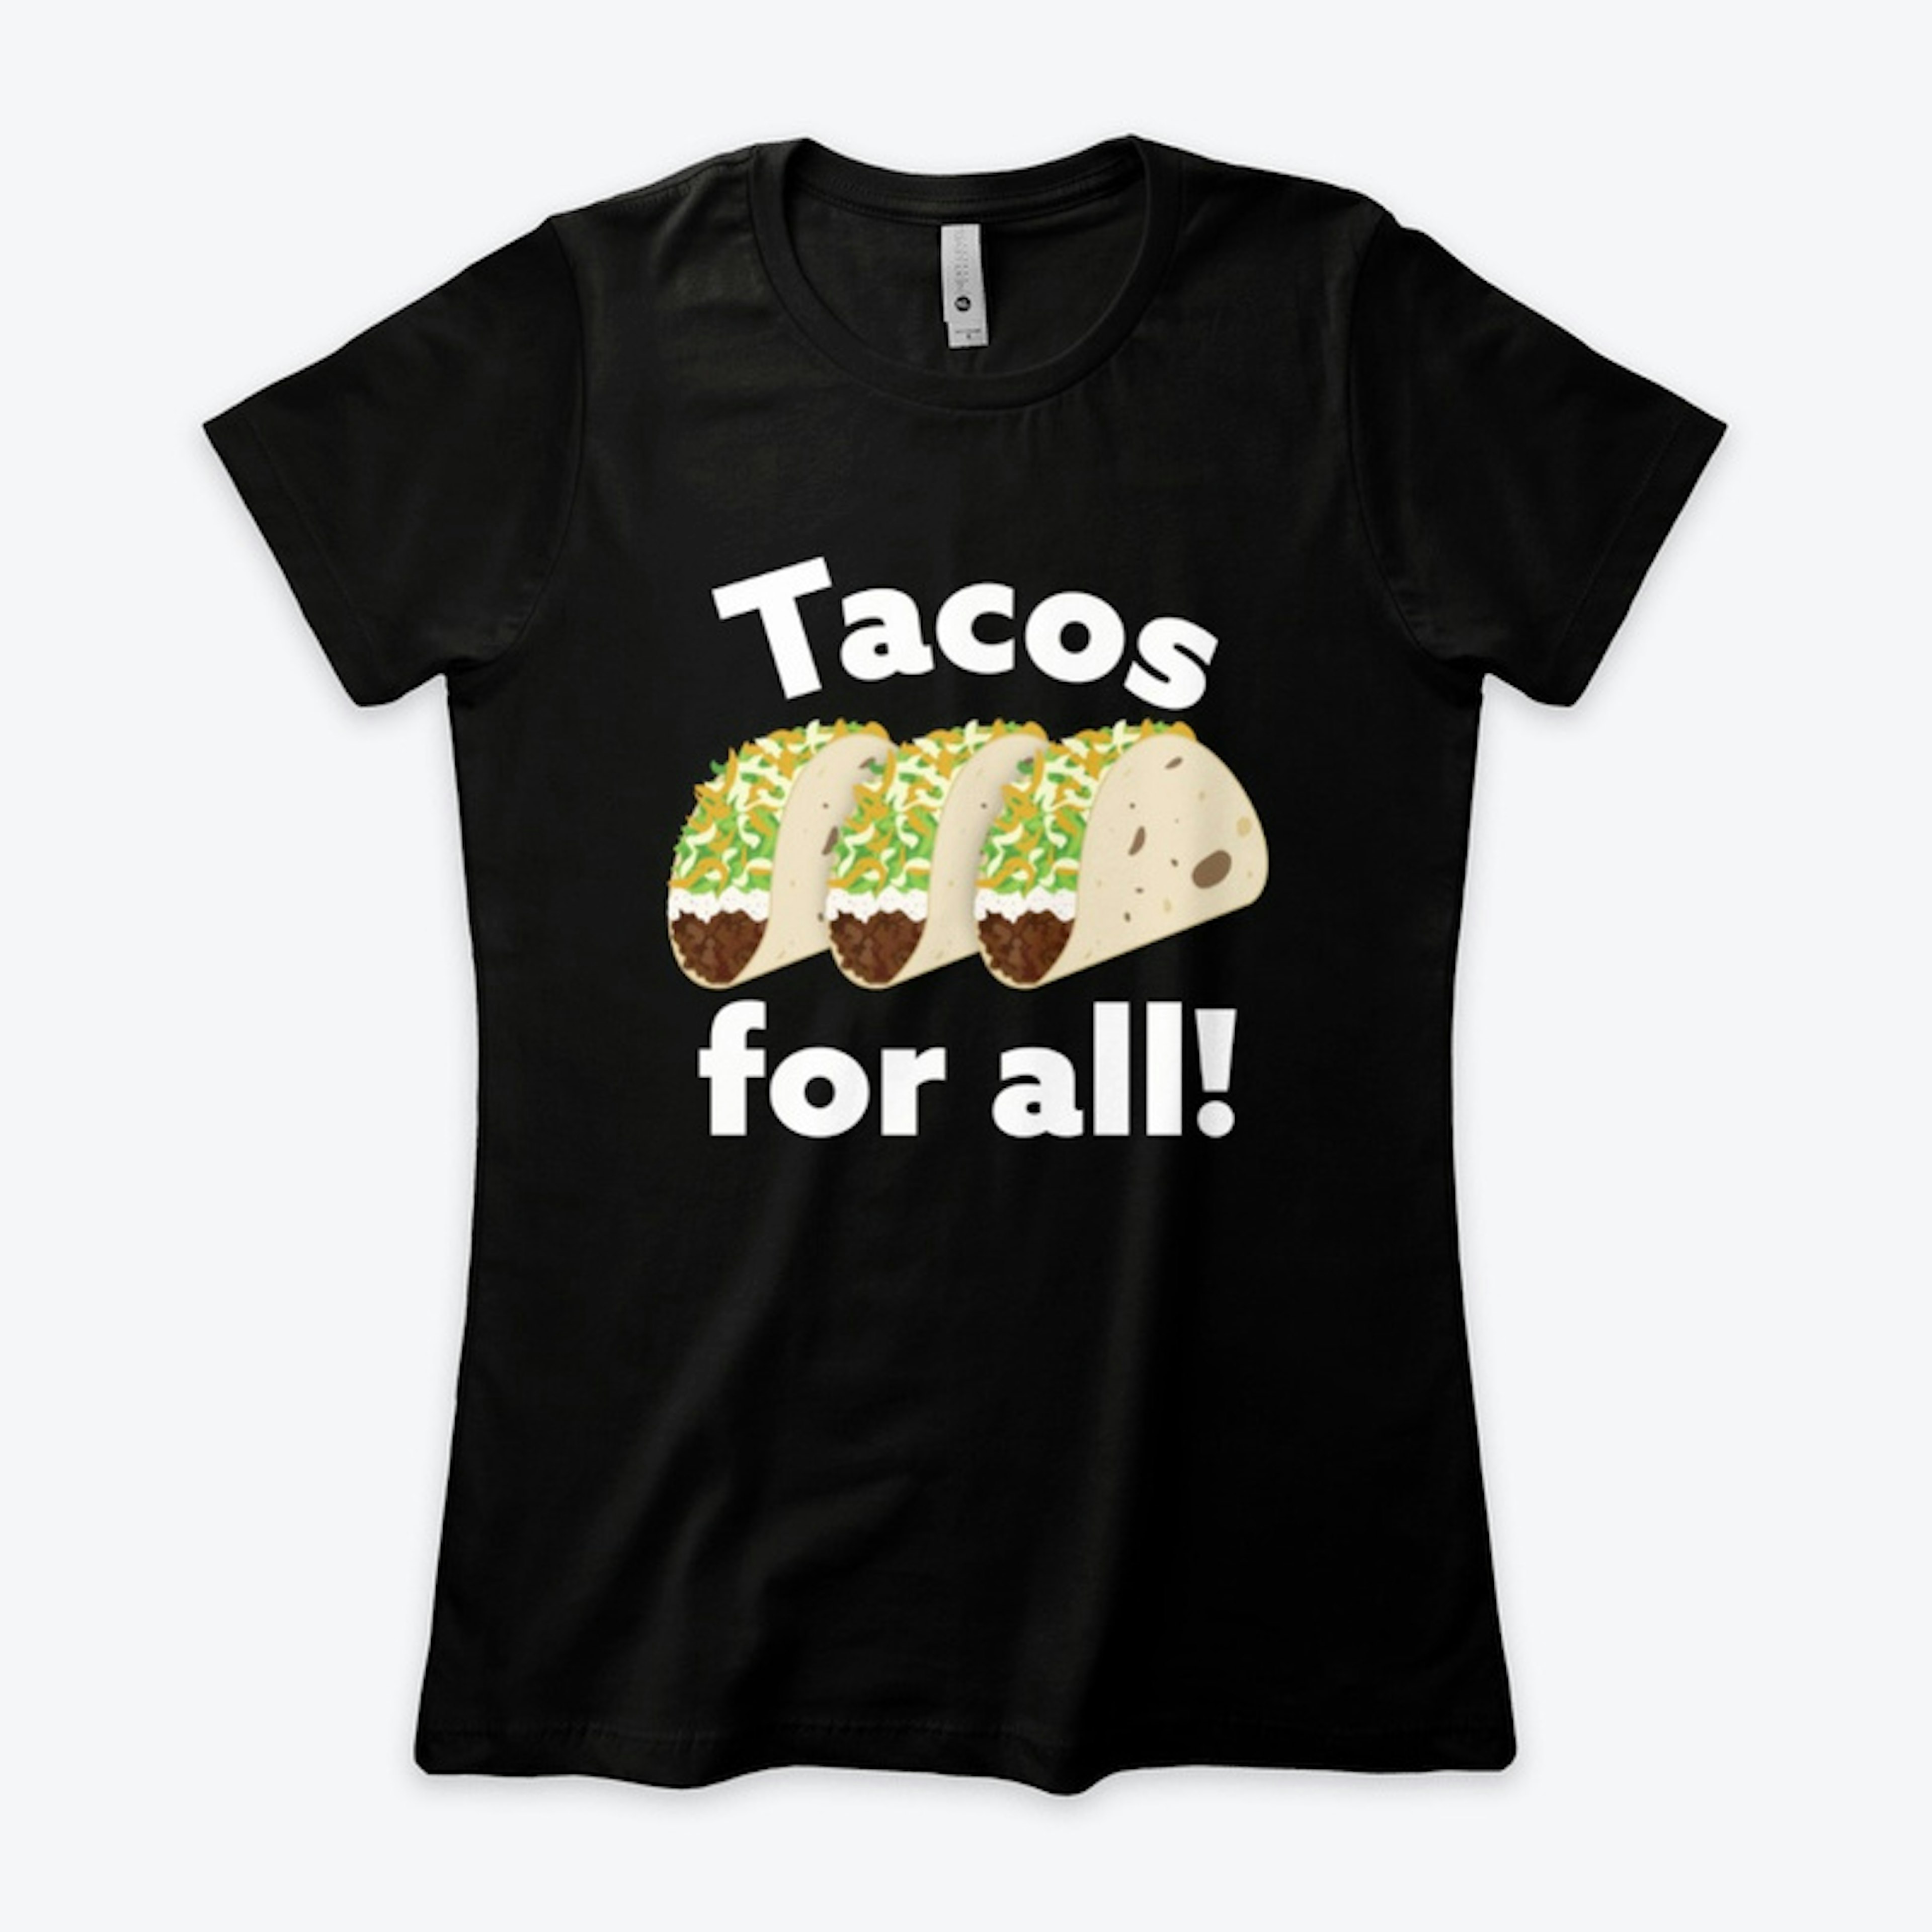 Tacos For All! (dark)